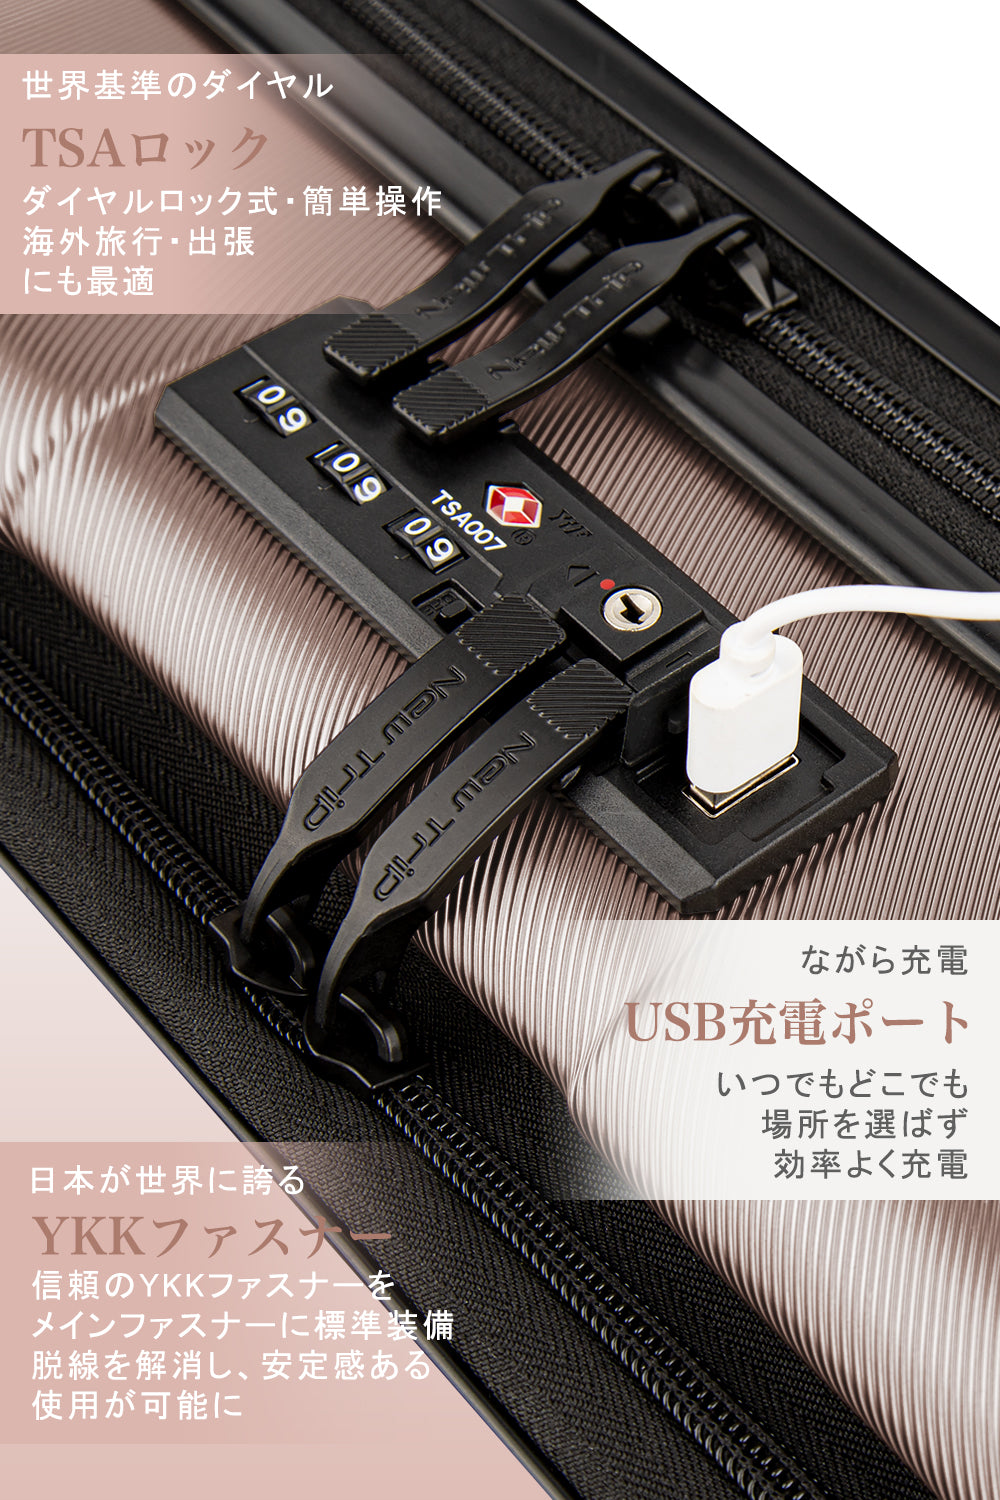 [New Trip] キャリーケース フロントオープン 機内持ち込み ストッパー付き スーツケー USBポート付き TSAロック 1-4泊 40リットル Sサイズ ローズゴールド